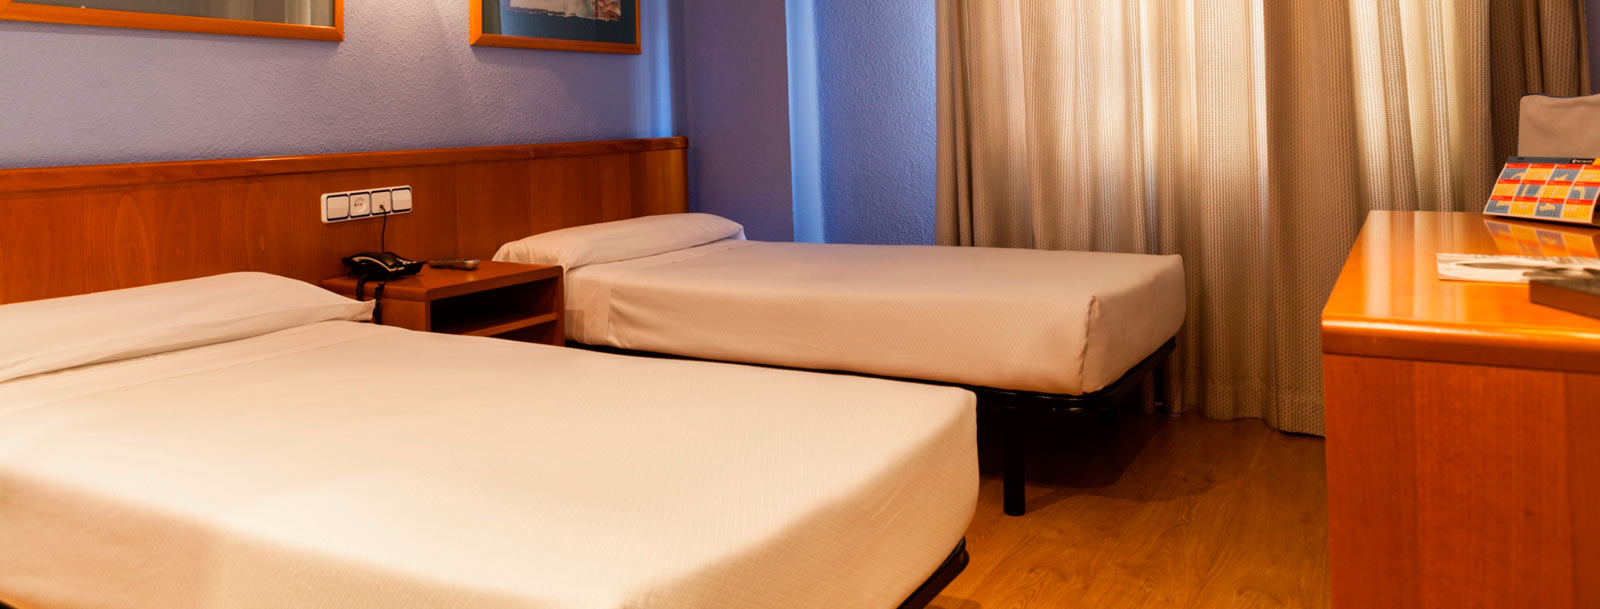 hotel City Express Covadonga - hotel en Oviedo